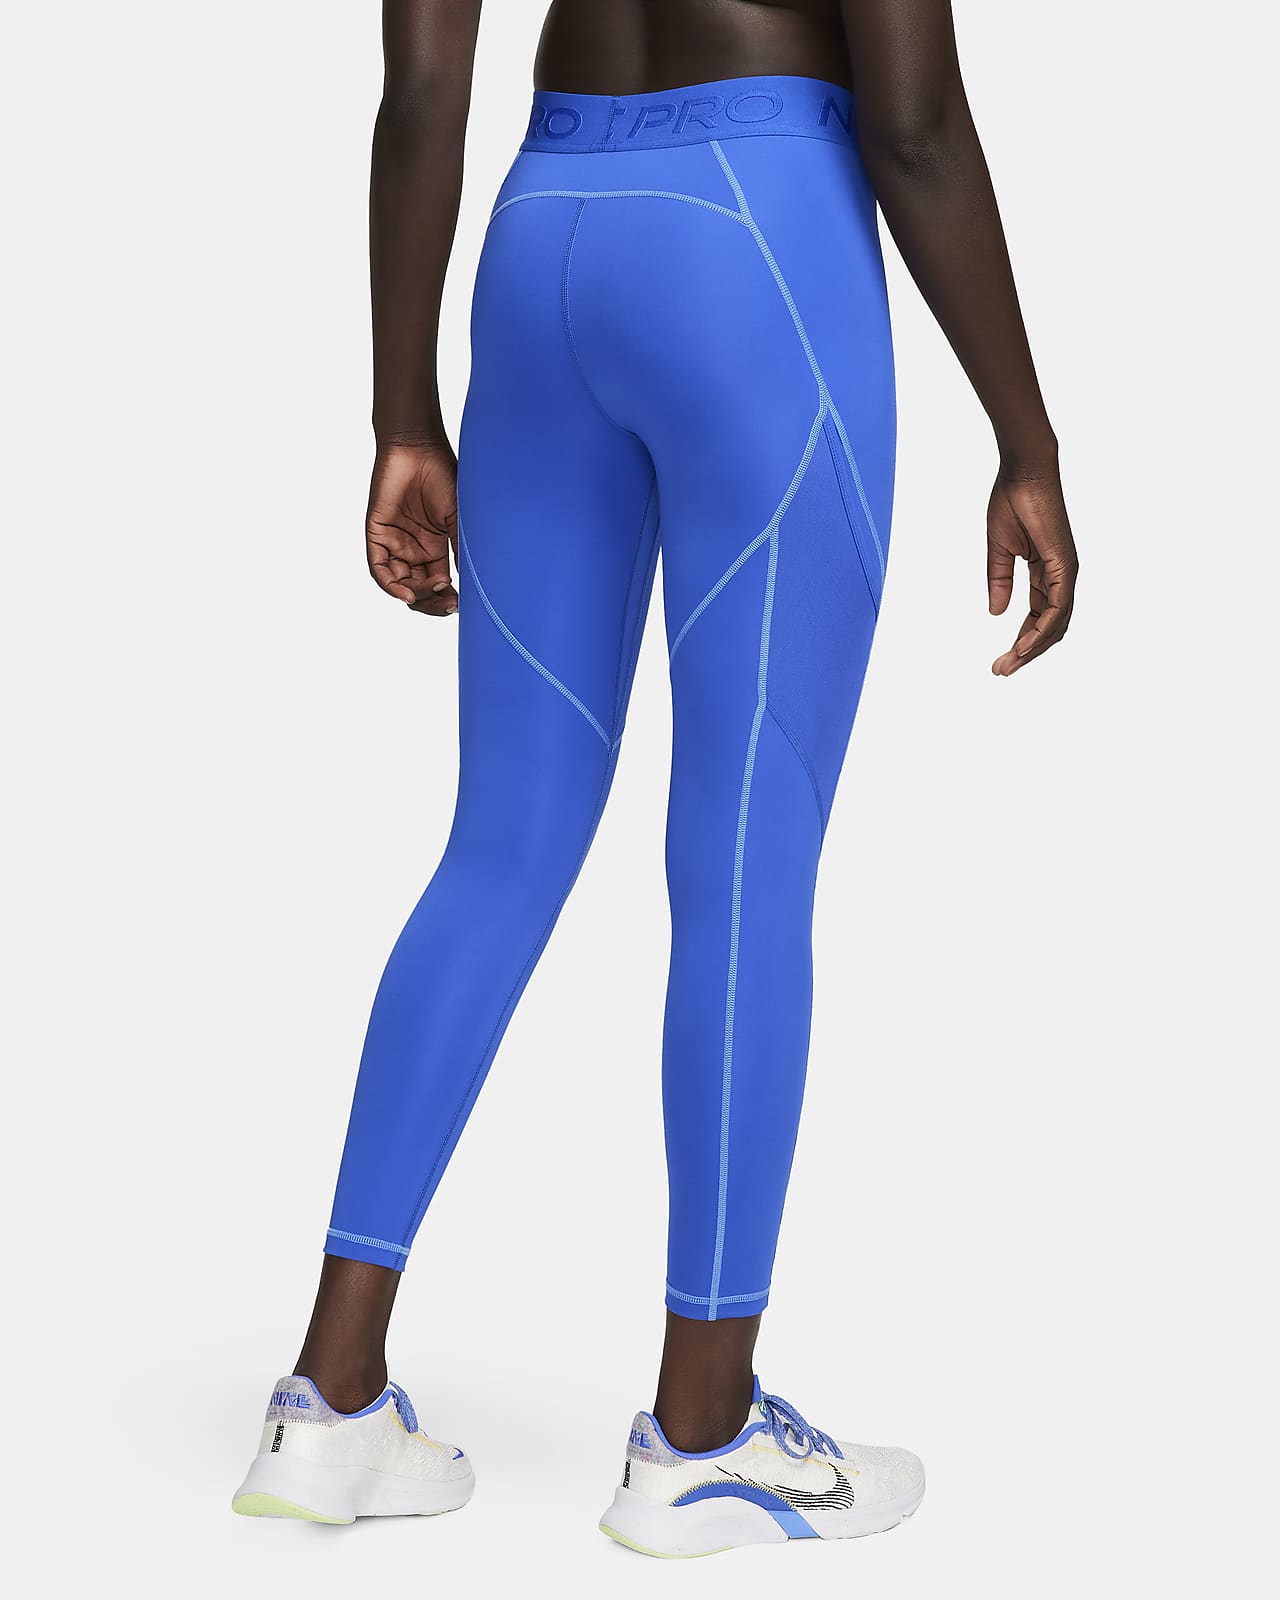 Nike Womens Twist Training Leggings Obsidian/Deep Royal Blue/Black  833314-451 M 